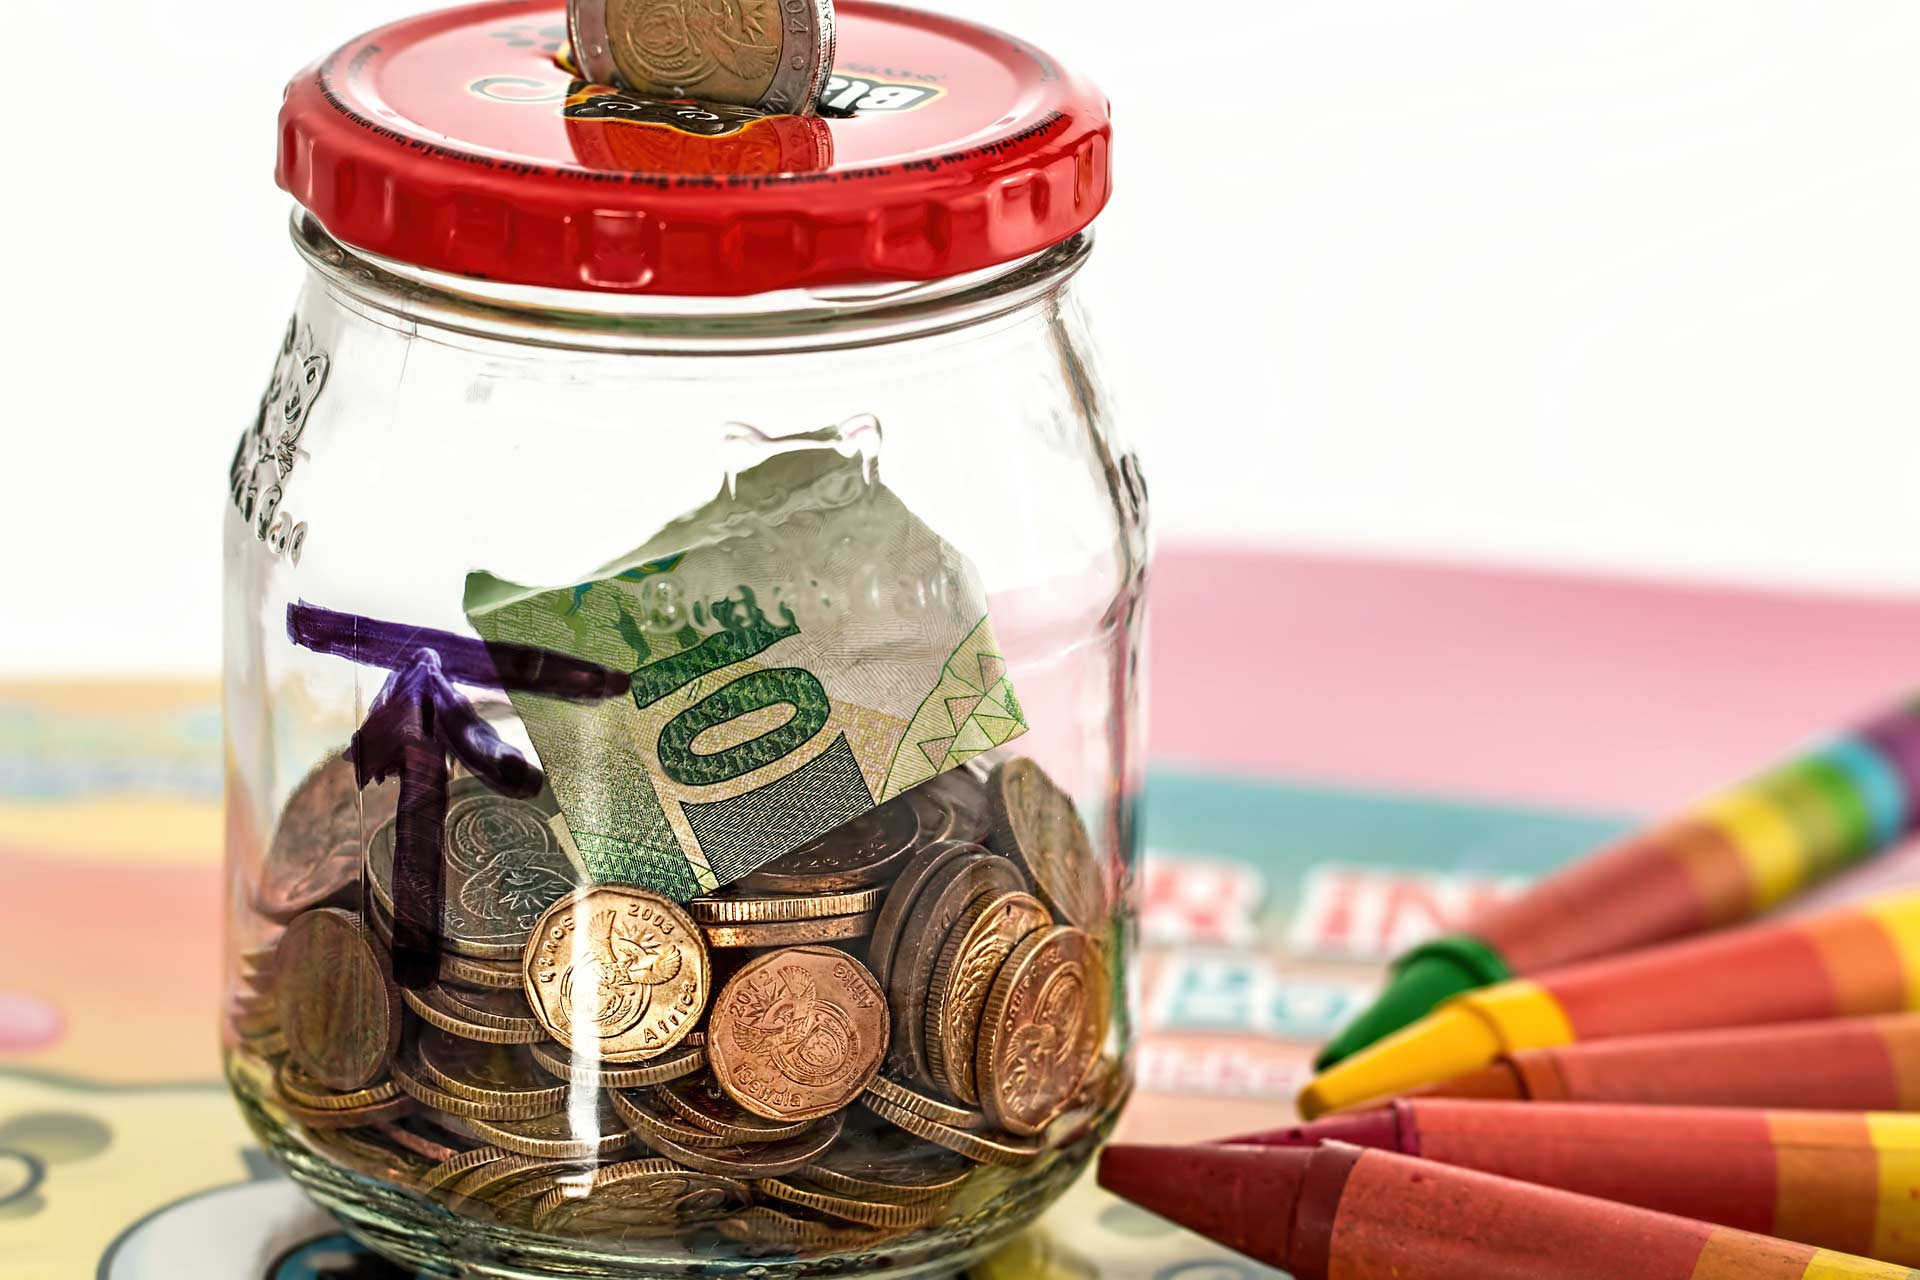 Savings jar with coins